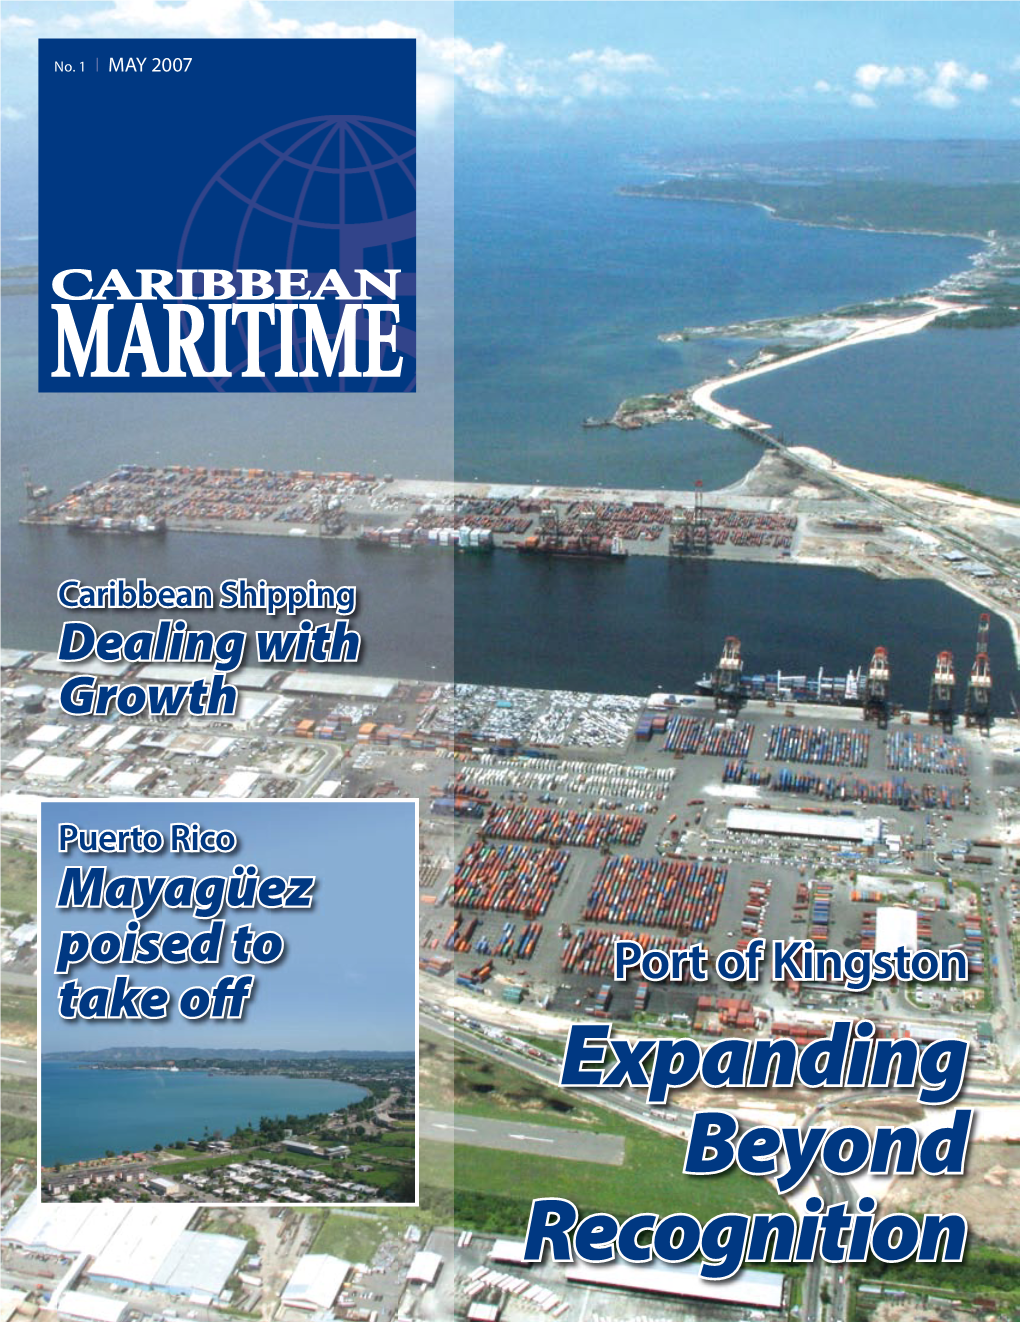 The Caribbean Shipping Association